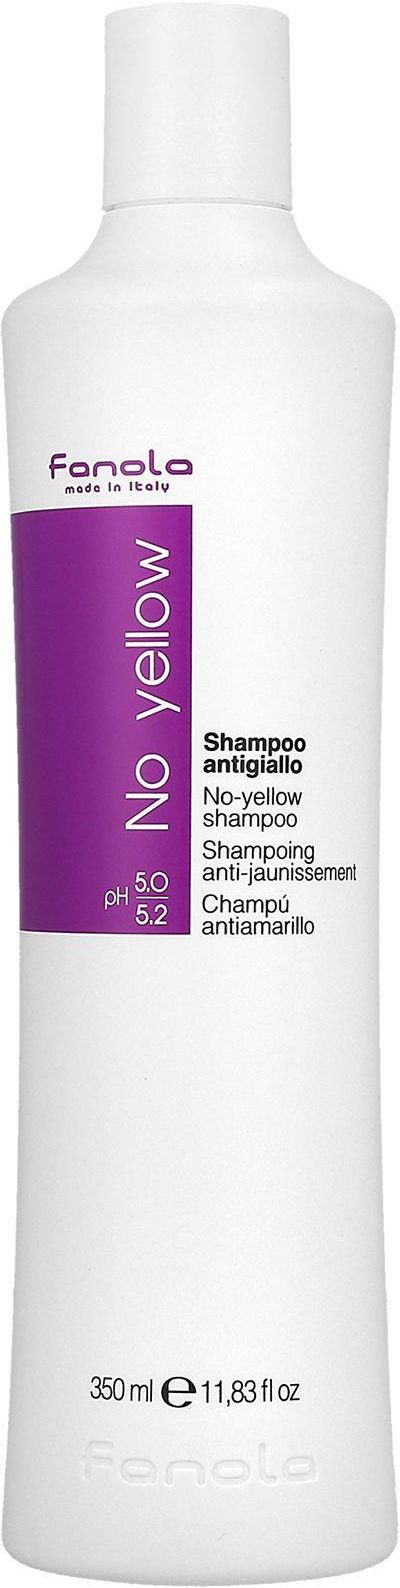 szampon no yellow fanola opinie